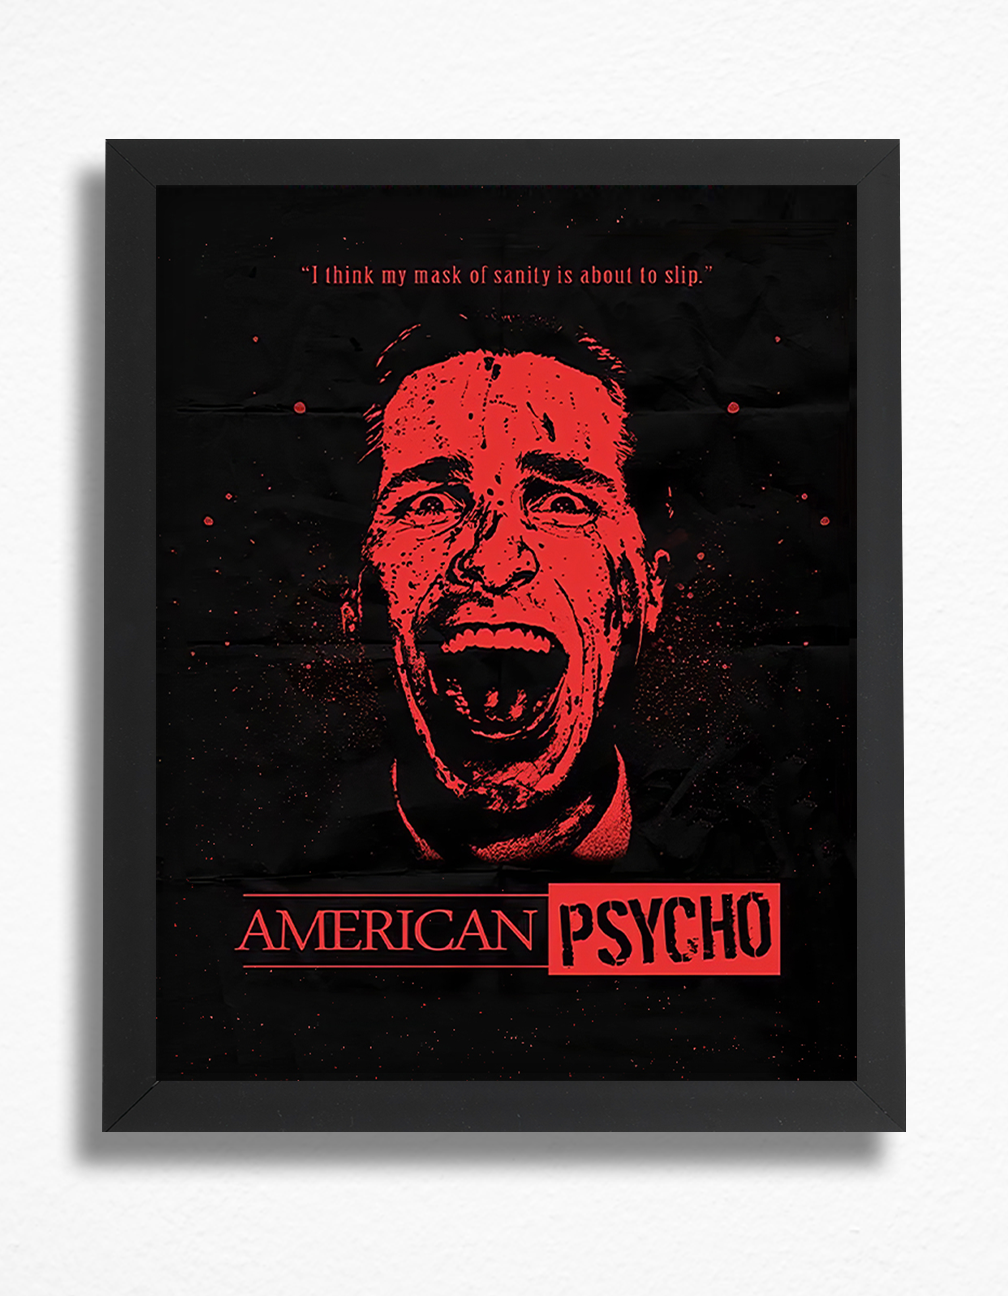 Patrick Bateman - American Psycho